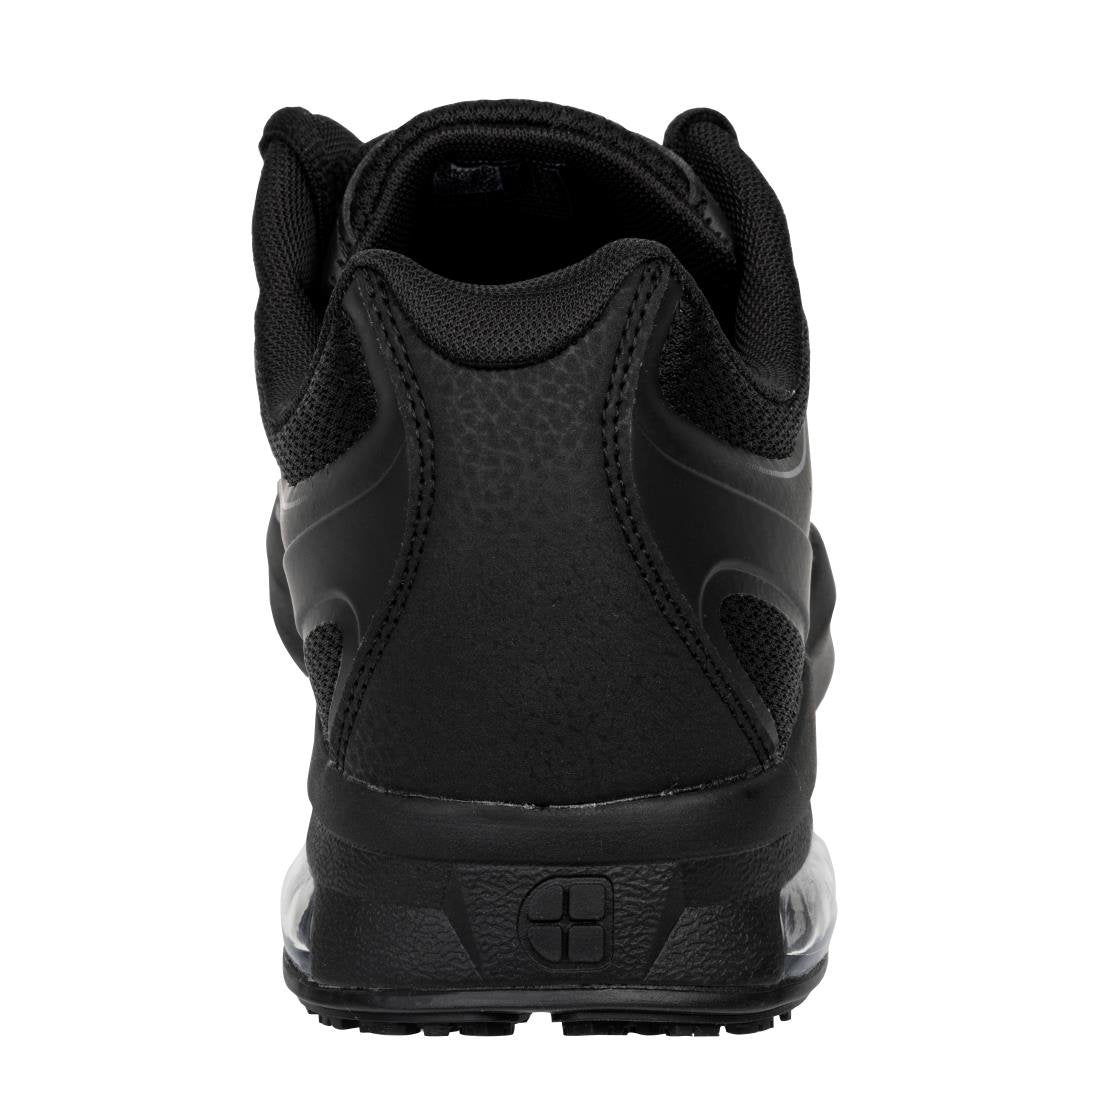 BB586-43 Shoes for Crews Men's Evolution Trainers Black Size 43